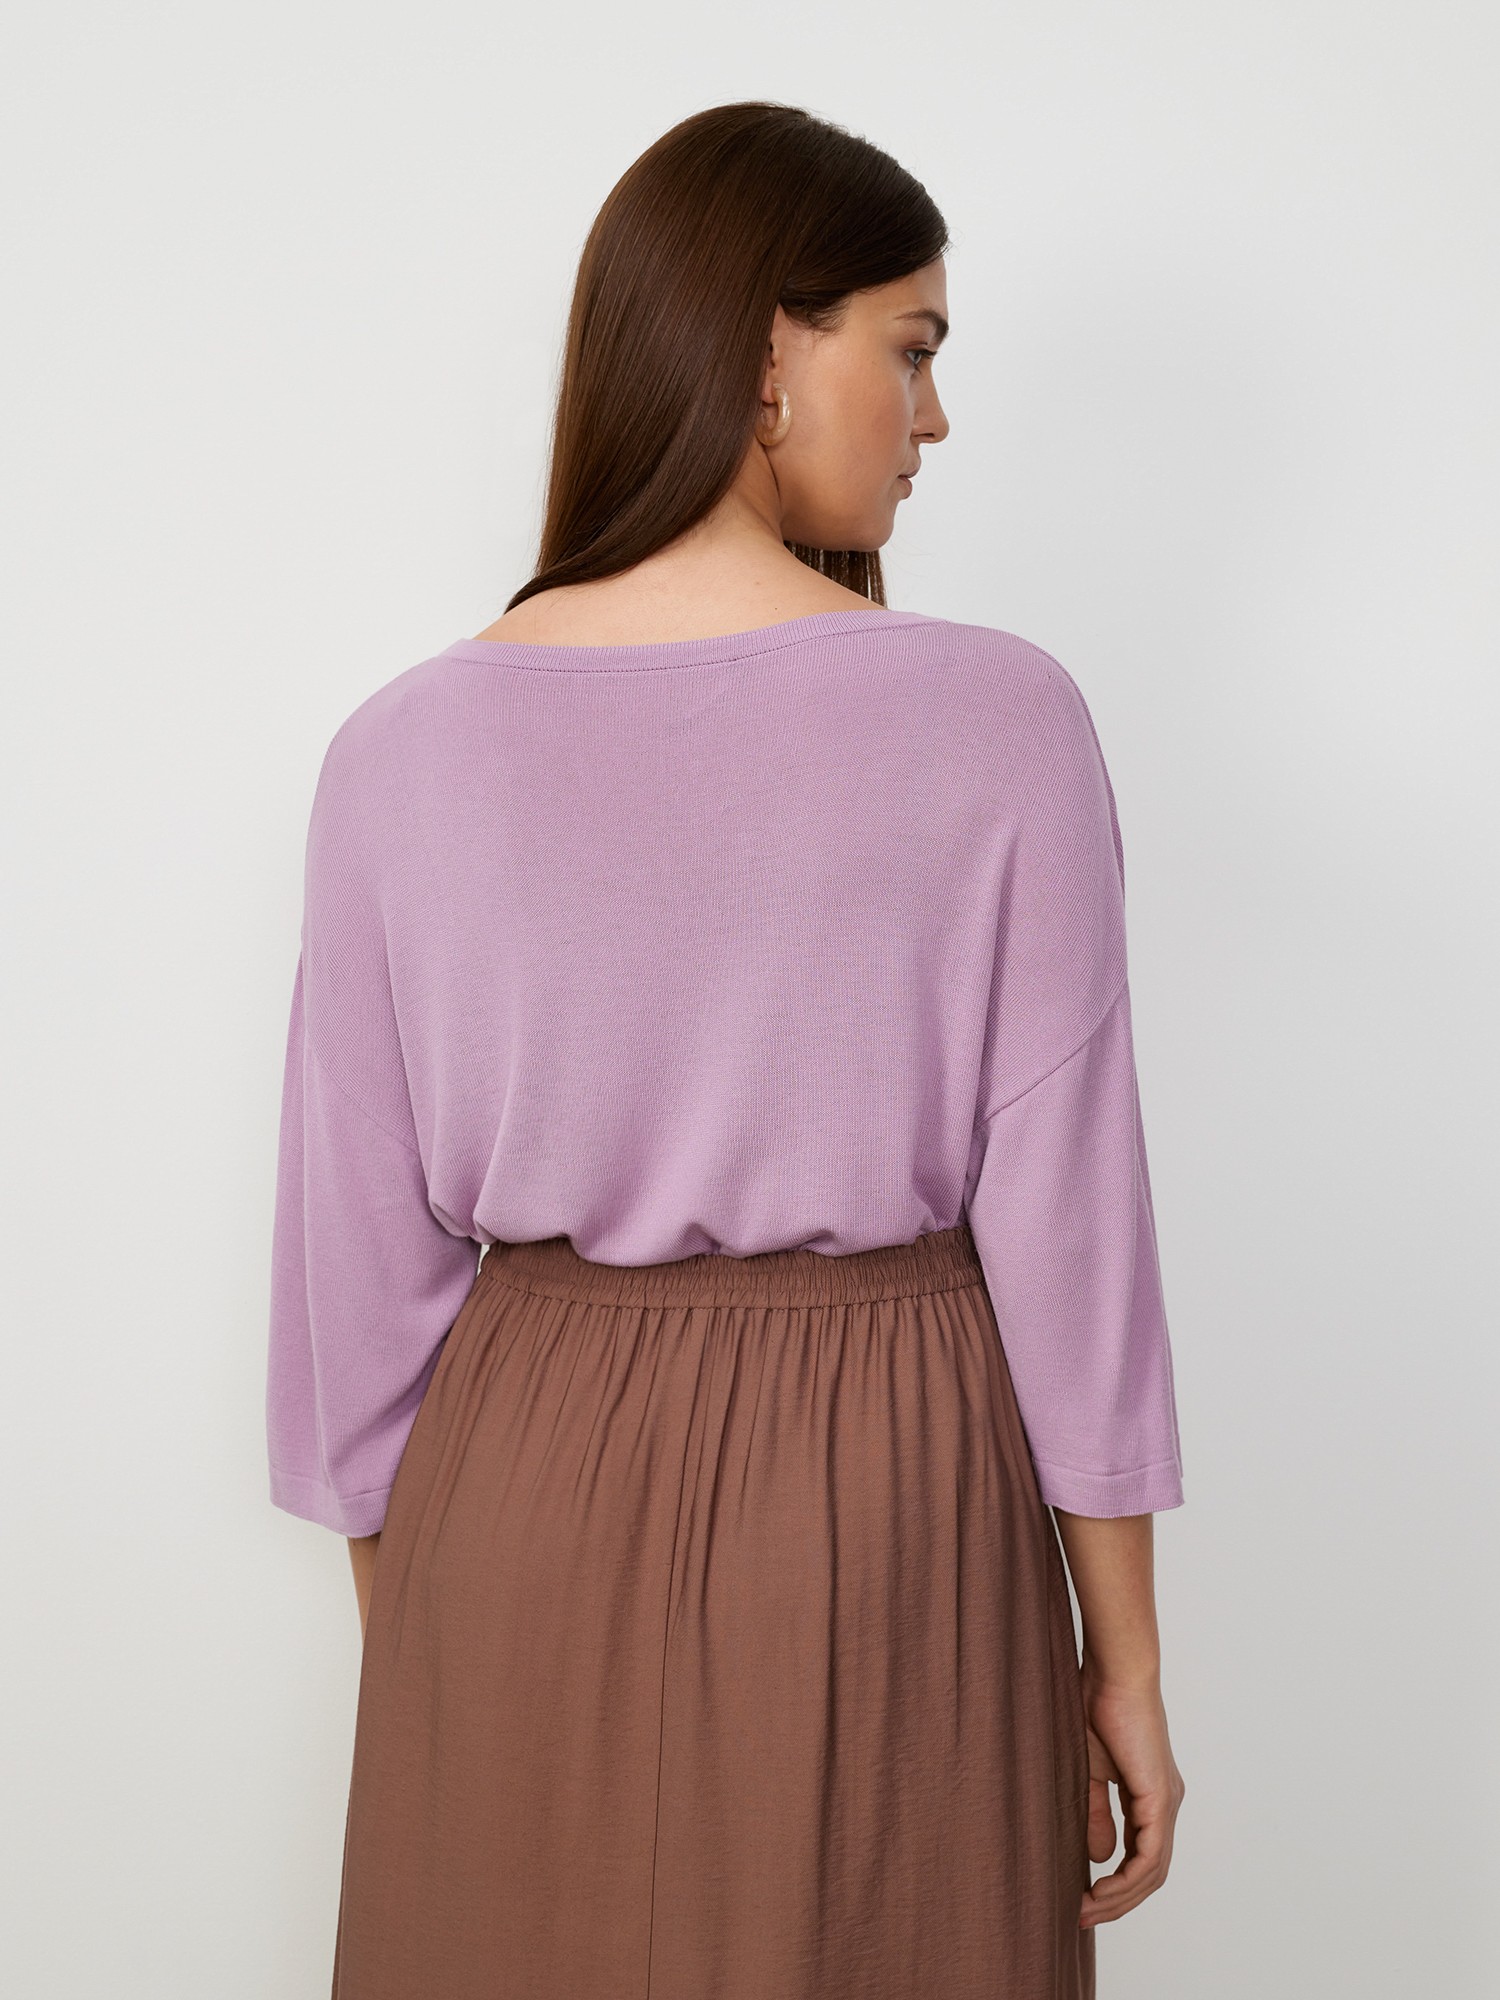 Блуза вязаная с монилью Lalis BL1069V, цвет фиолетовый, размер 54 - фото 4